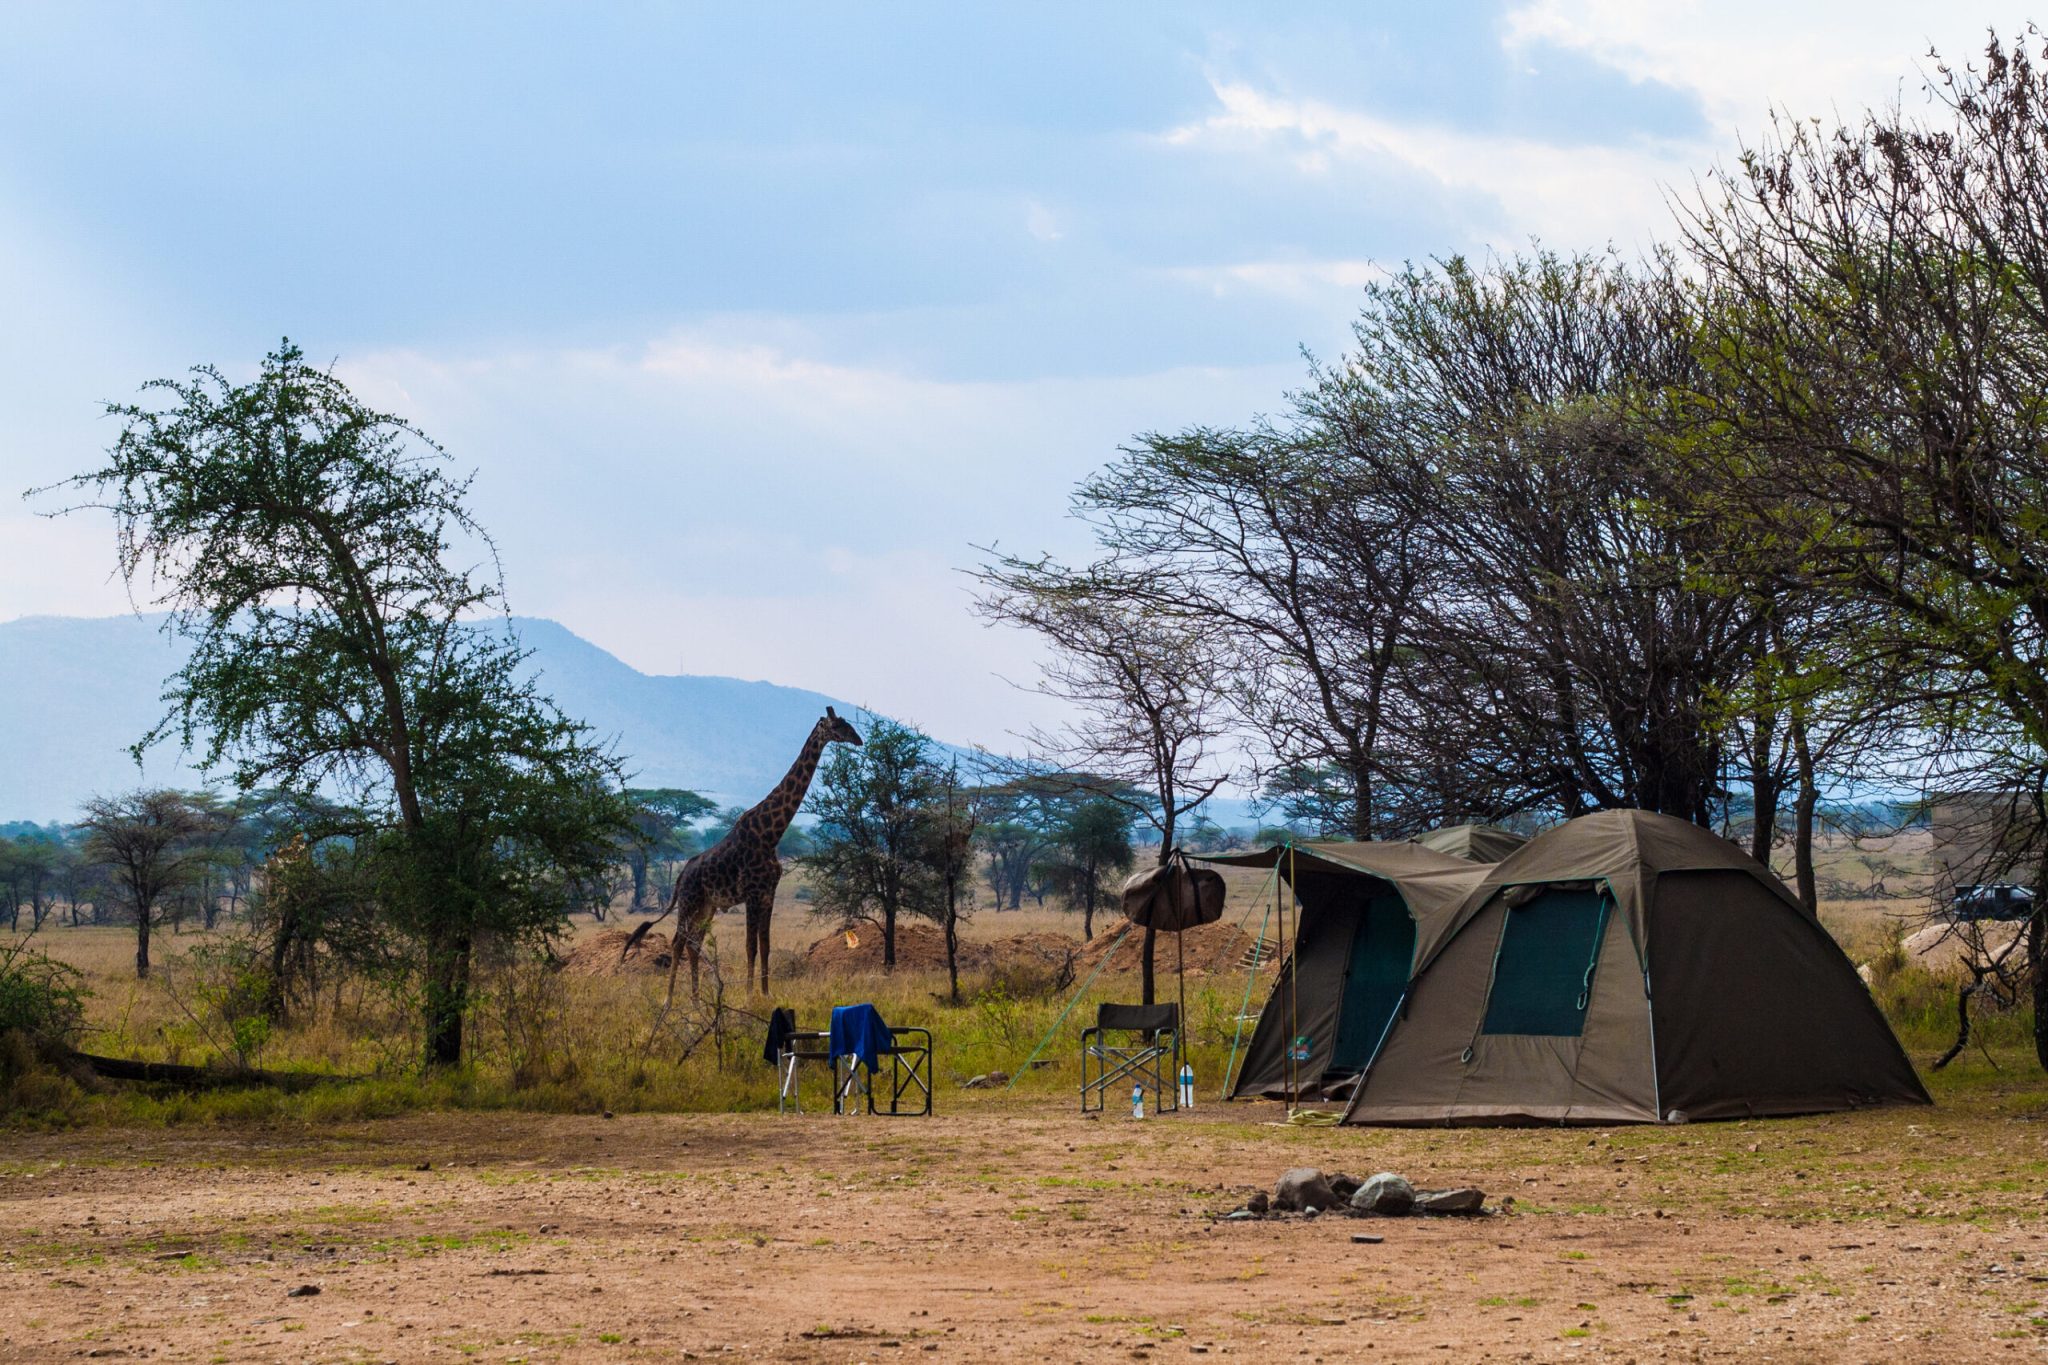 camp site with giraffe